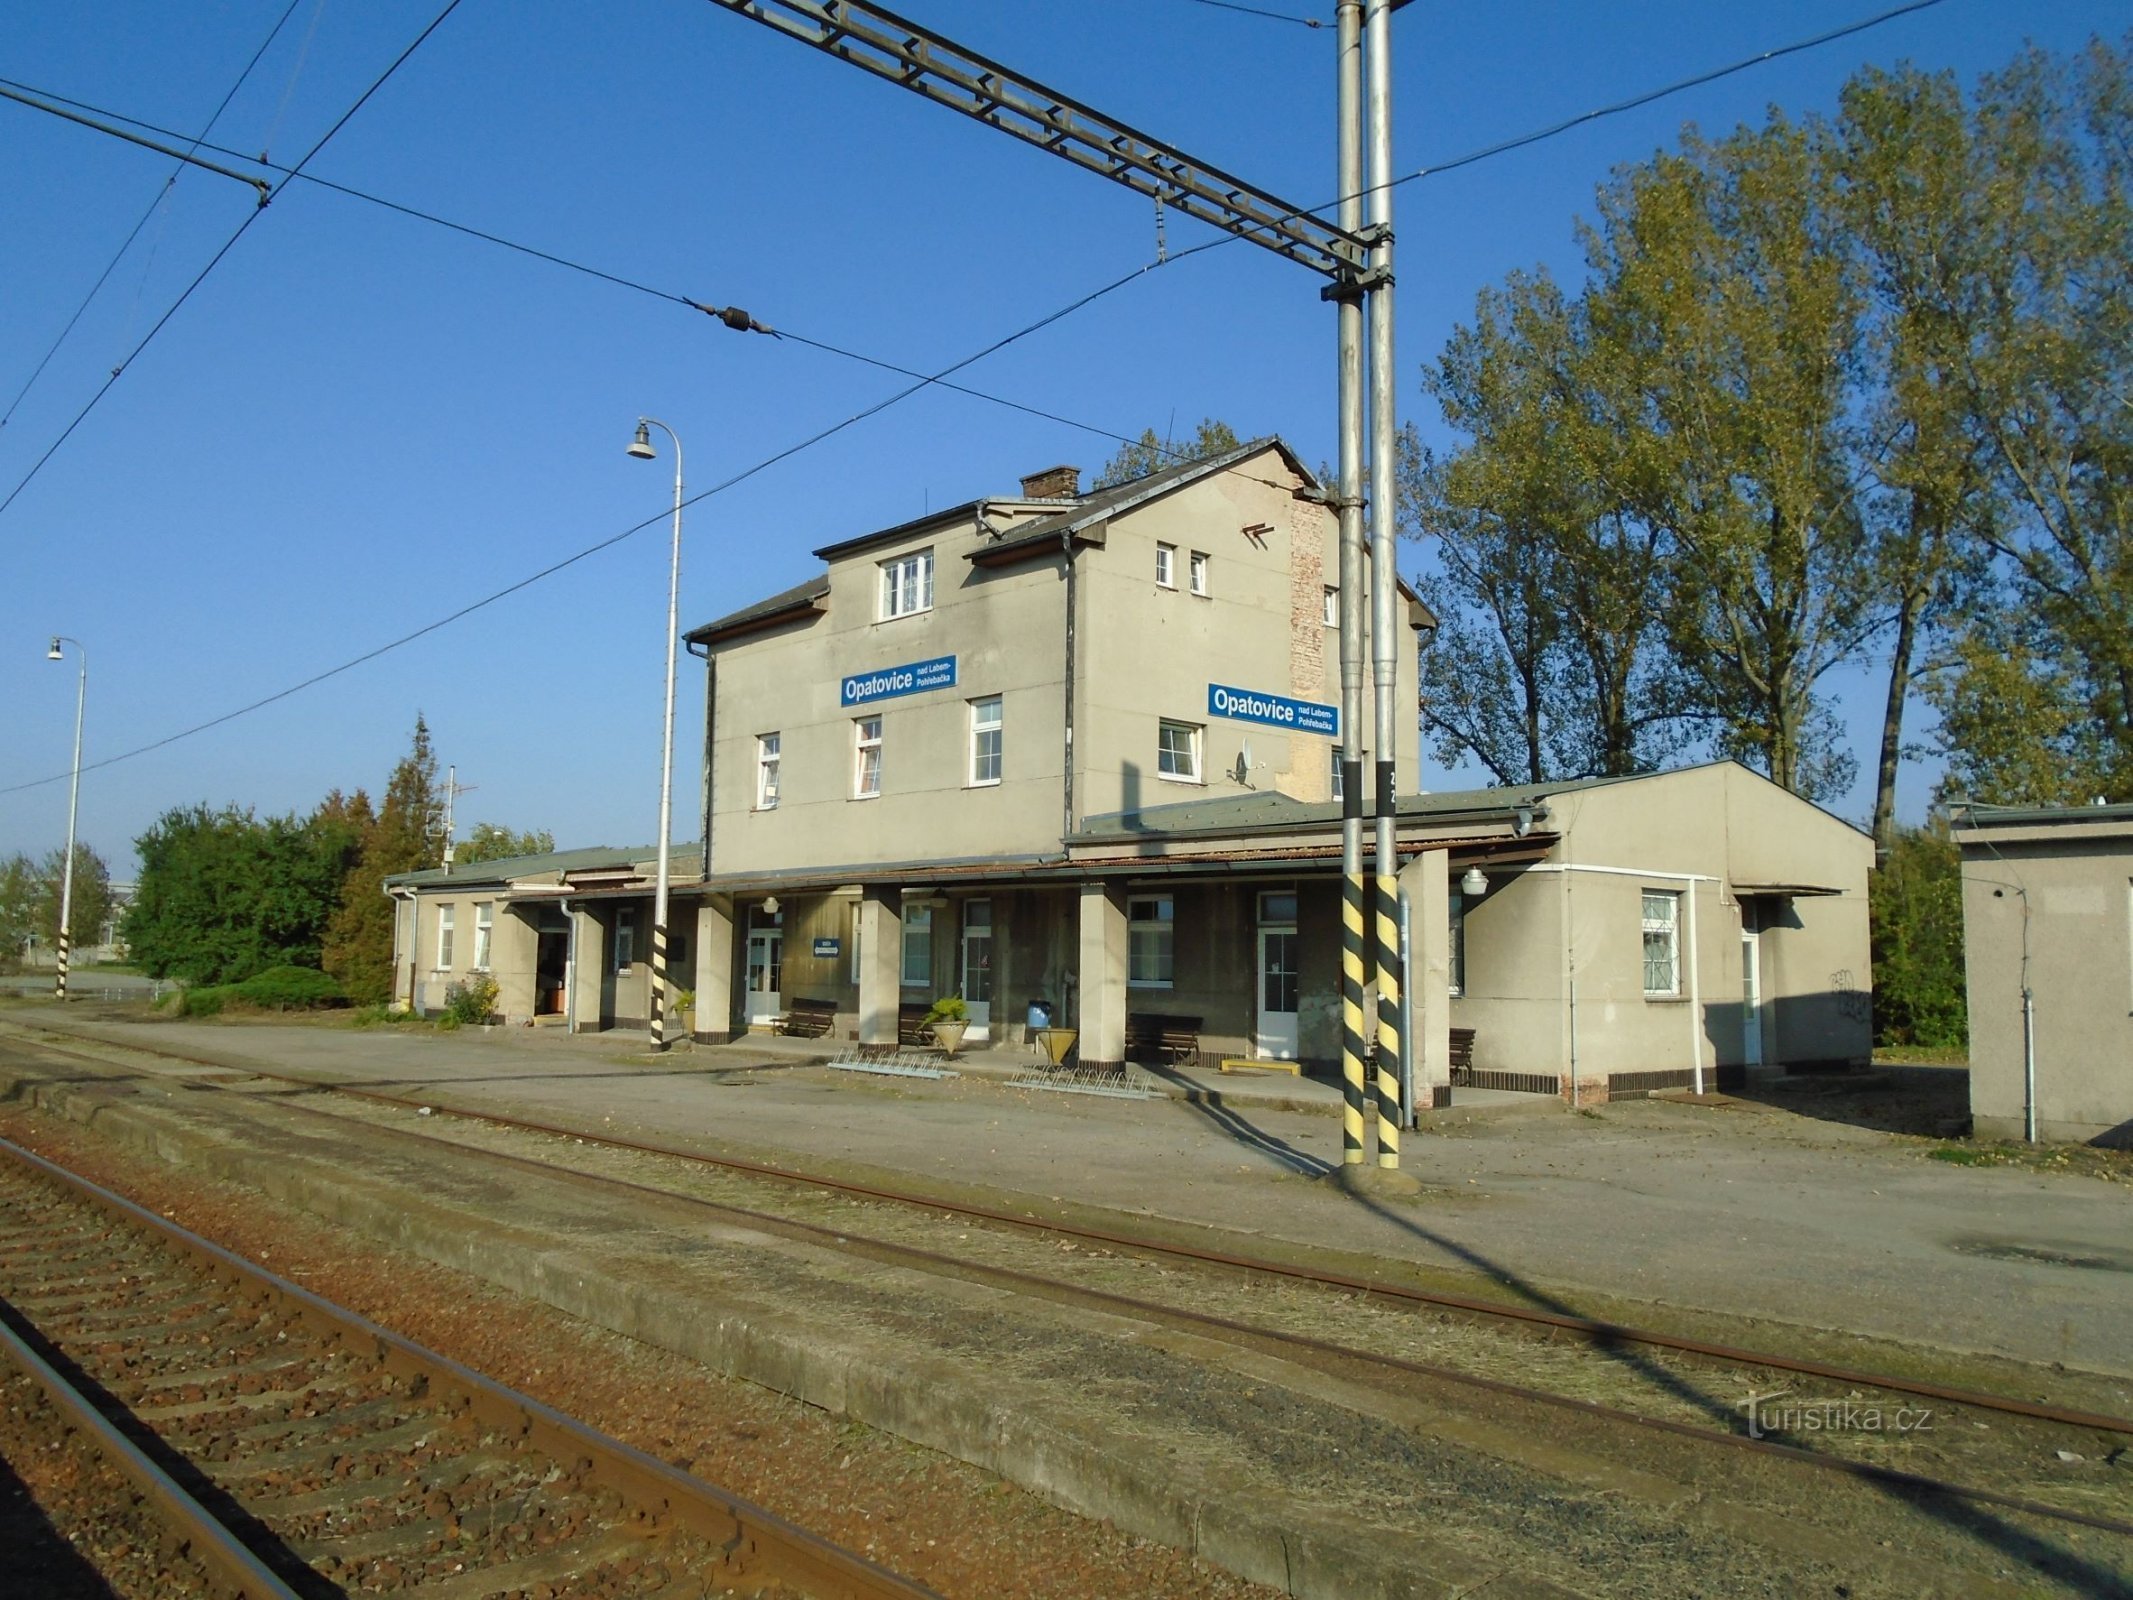 Stazione ferroviaria di Opatovice nad Labem-Pohřebačka (30.9.2017 settembre XNUMX)